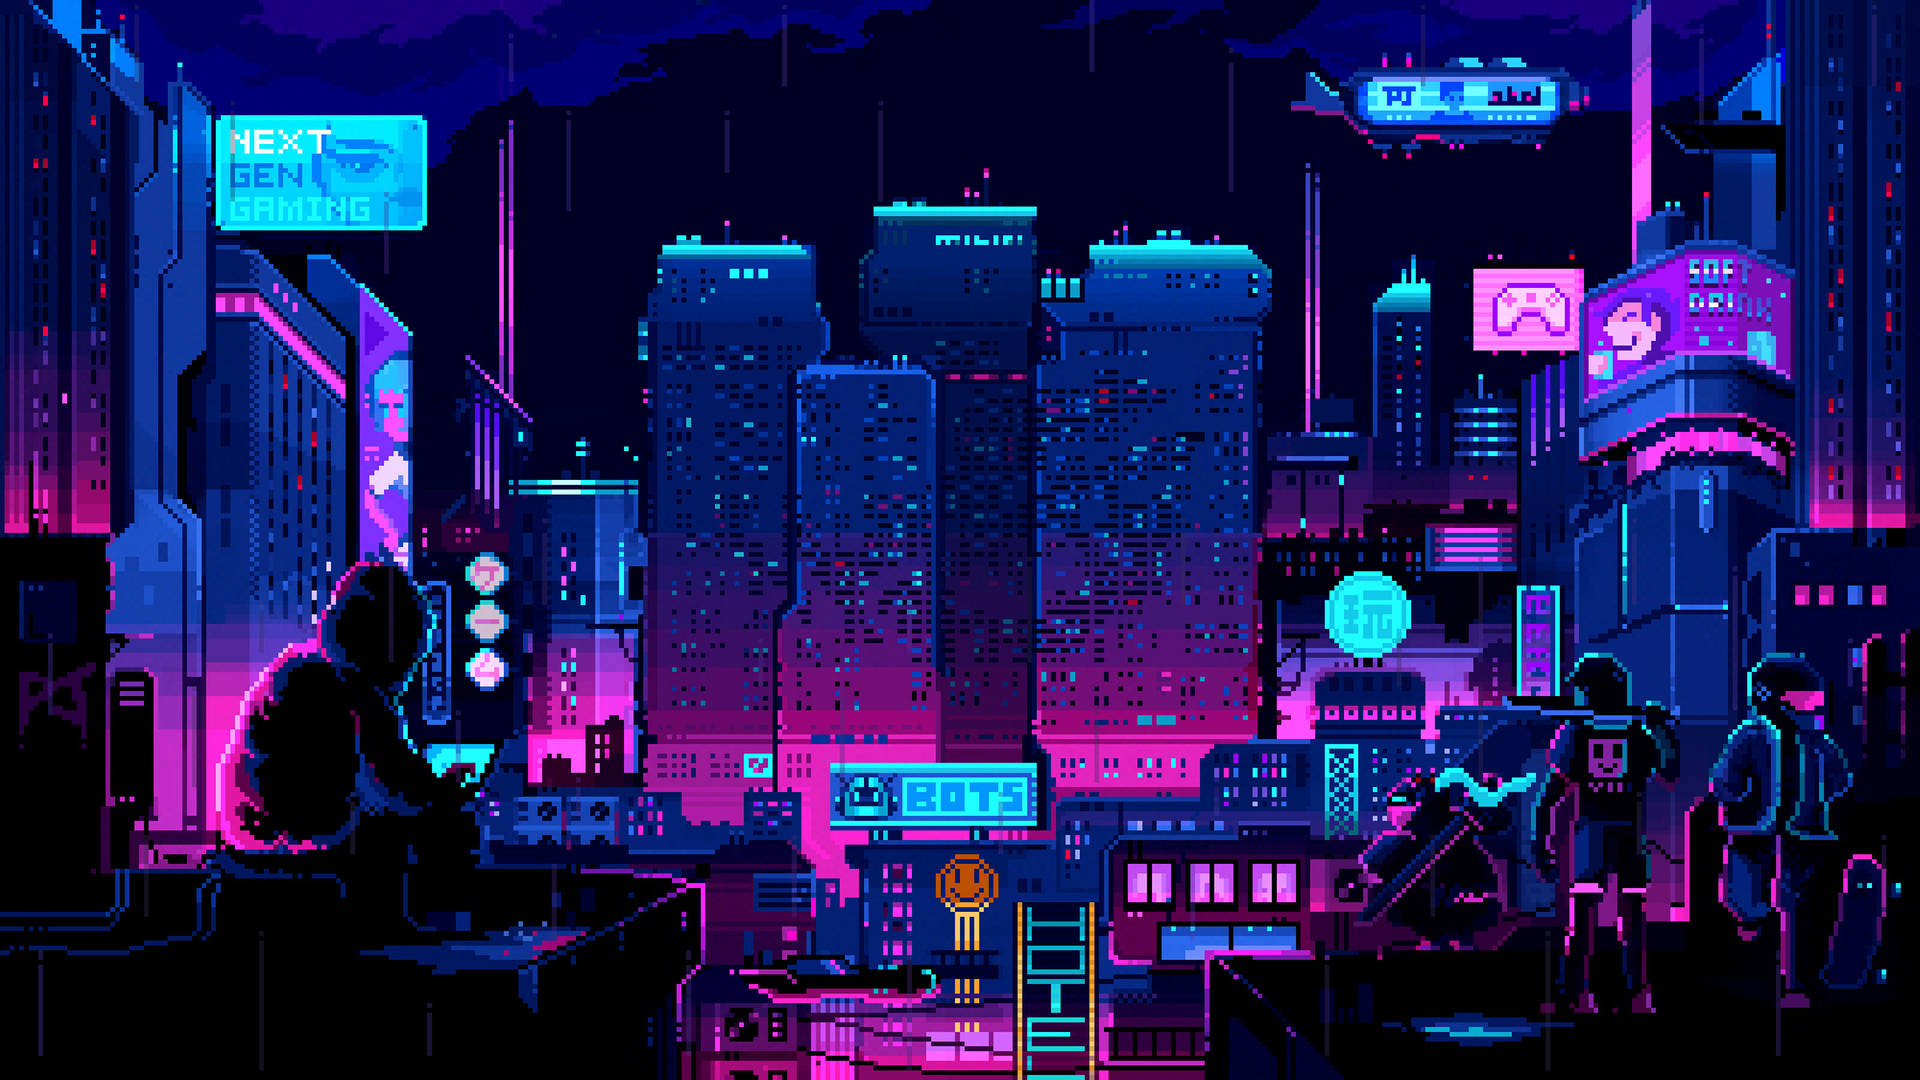 “Neon Pixel City - Illuminating the Design